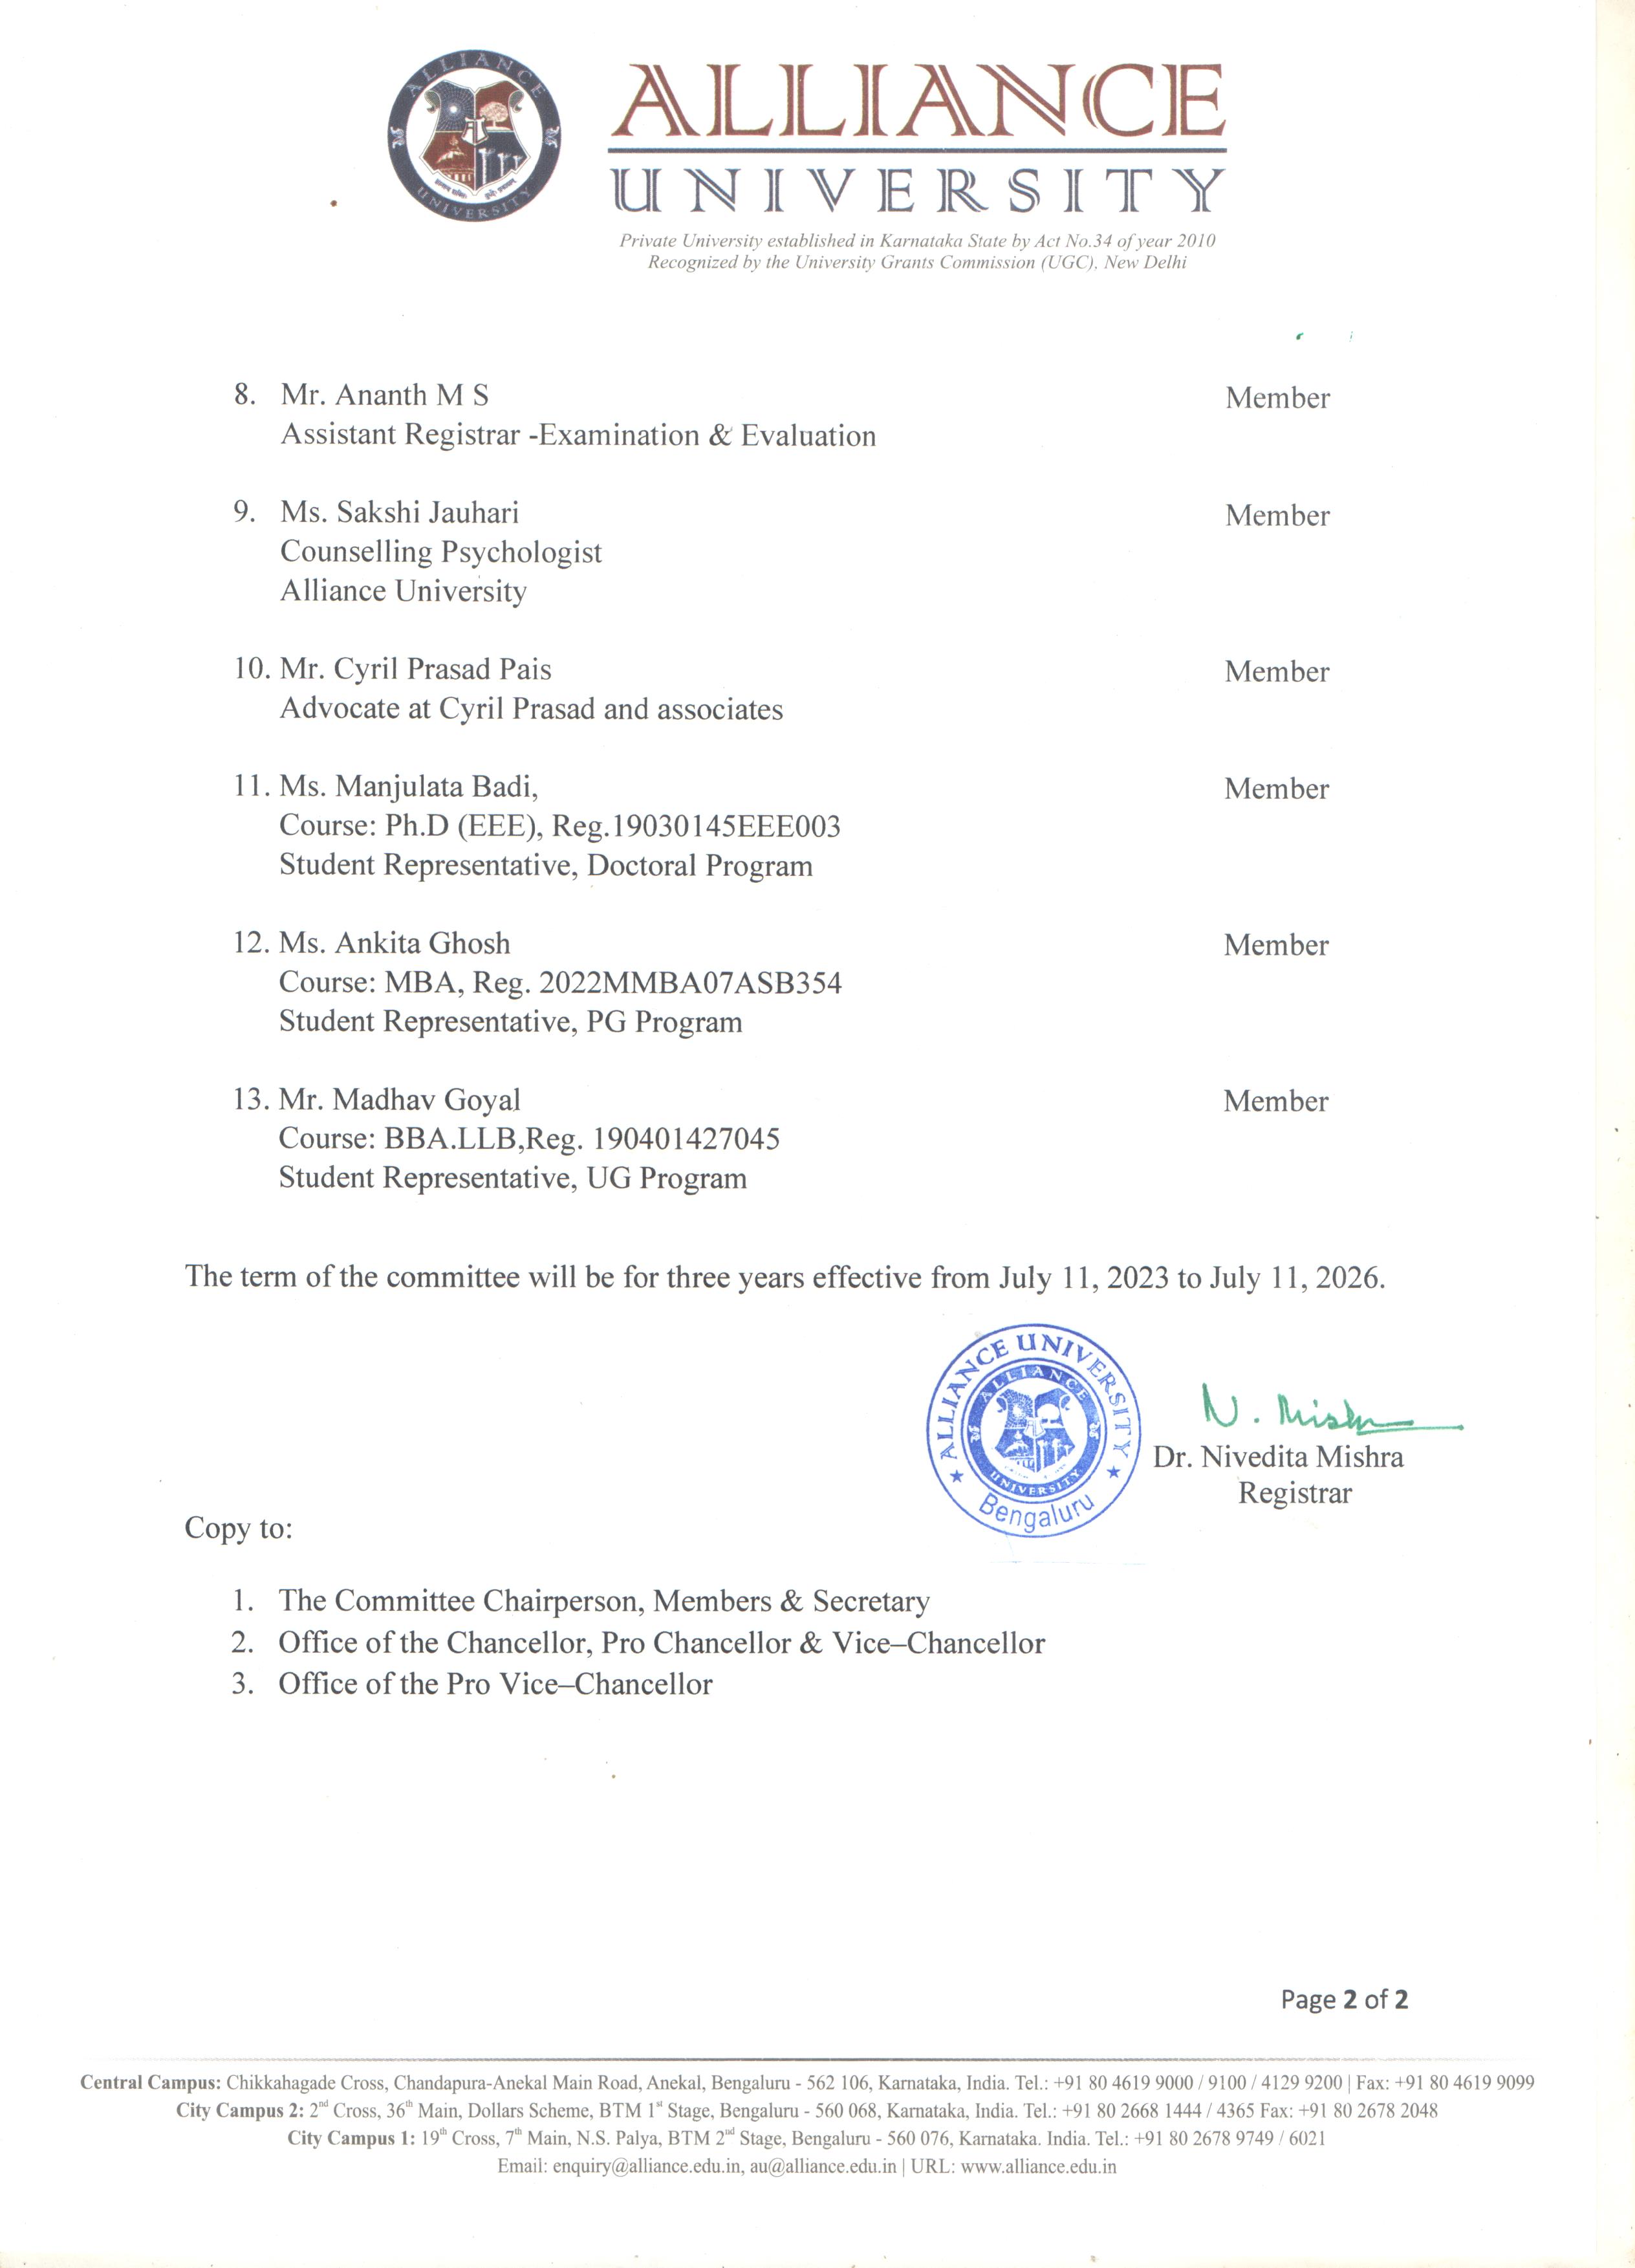 Reconstitution of Internal Complaint Committee of Alliance University, Bengaluru - 2